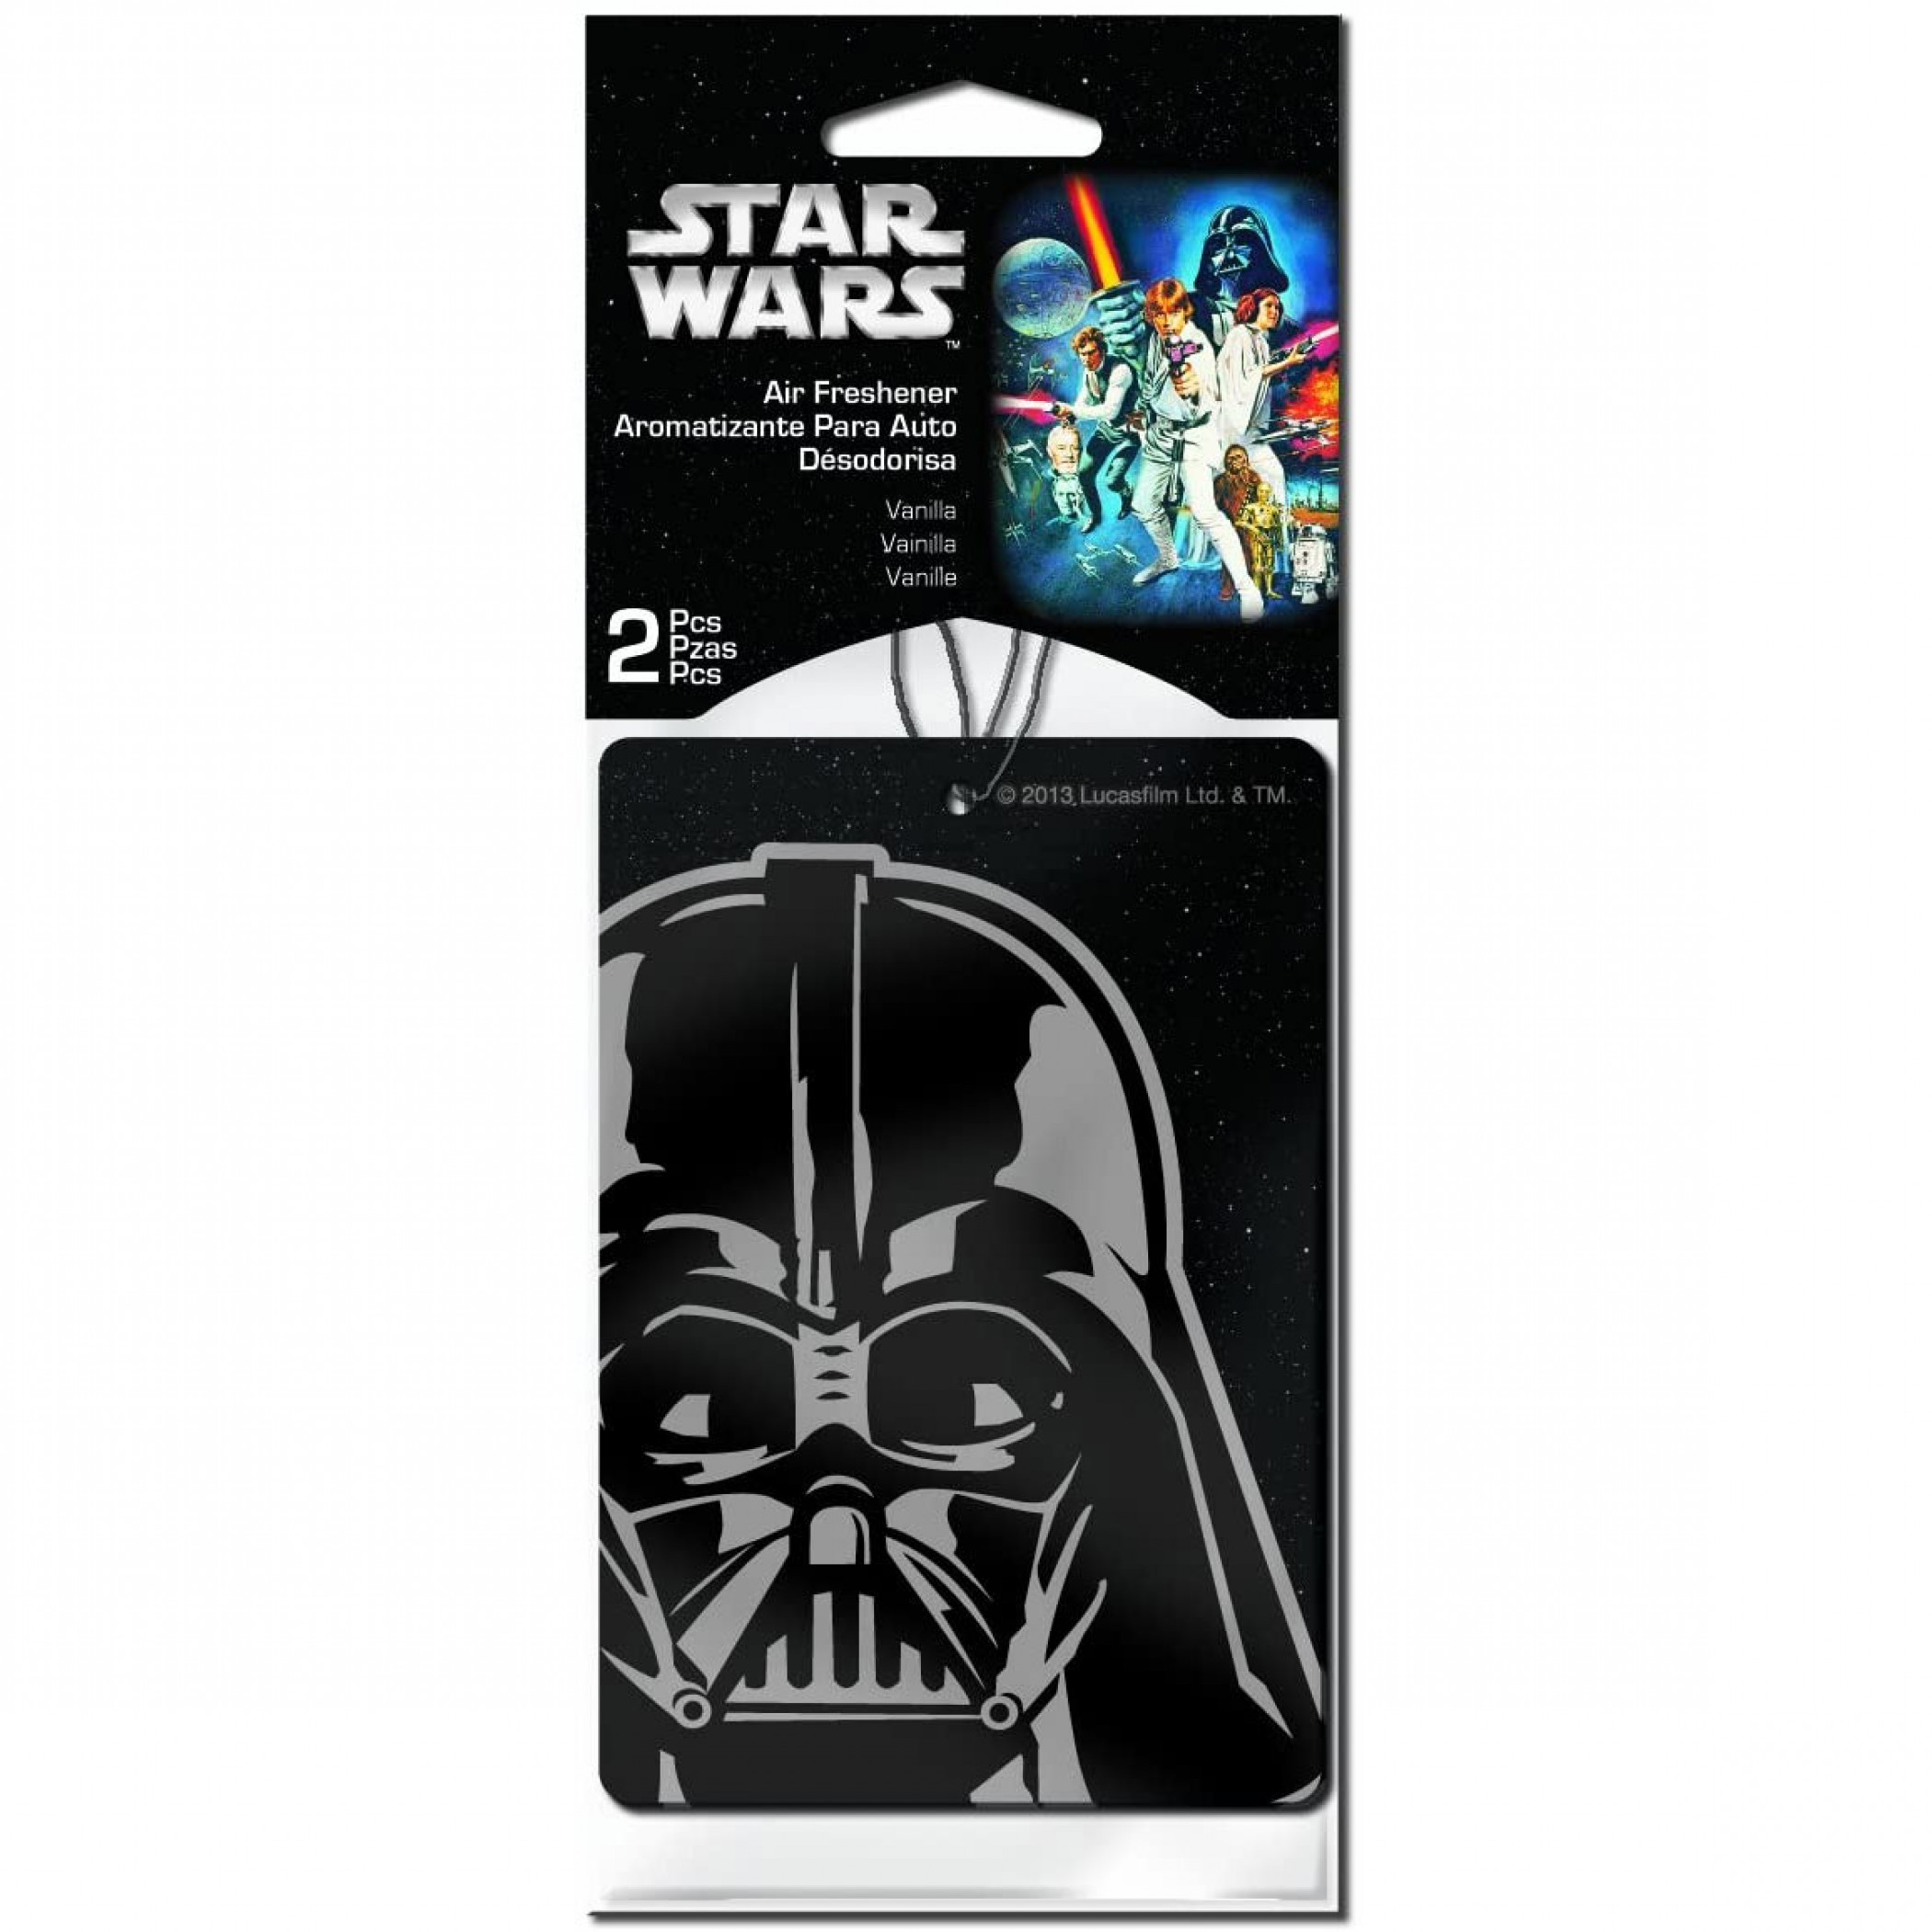 Star Wars Darth Vader Air Freshener 2-Pack